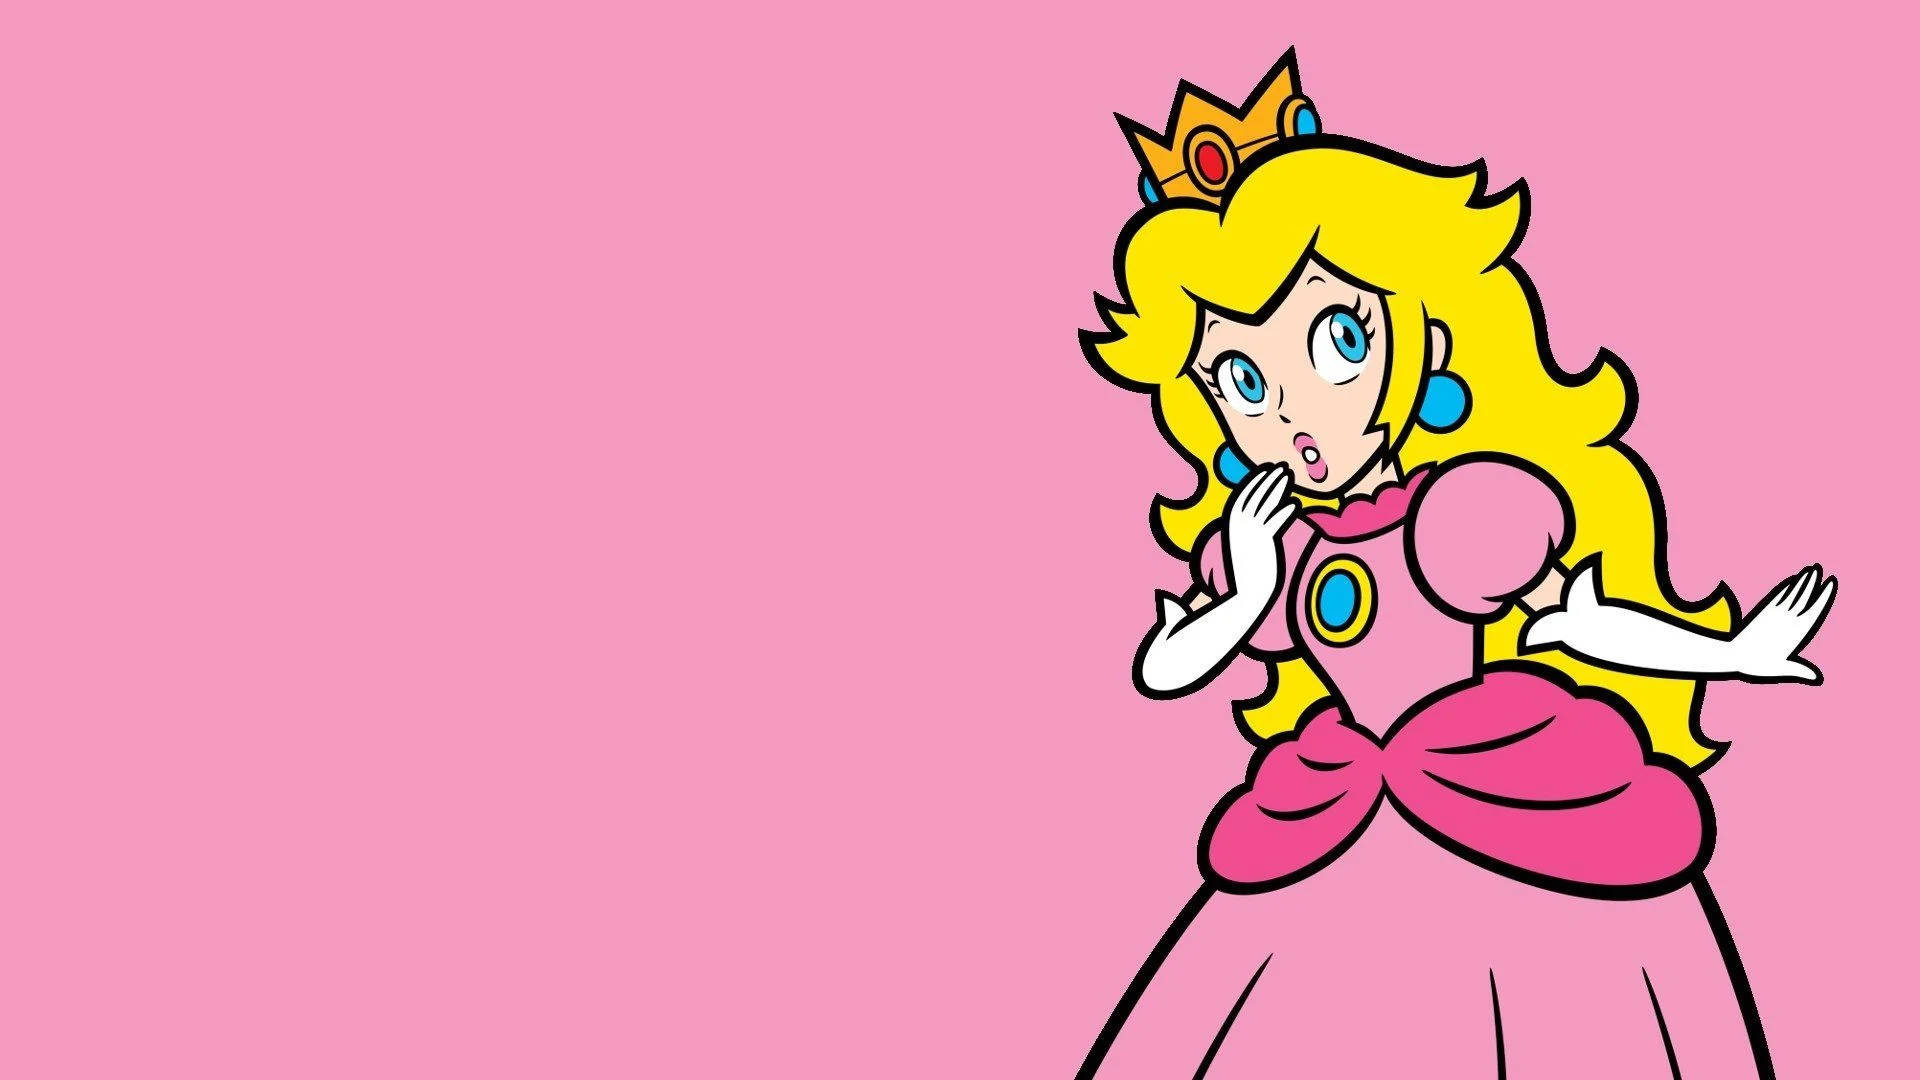 Princess Peach Nintendo Character Vector Art Background